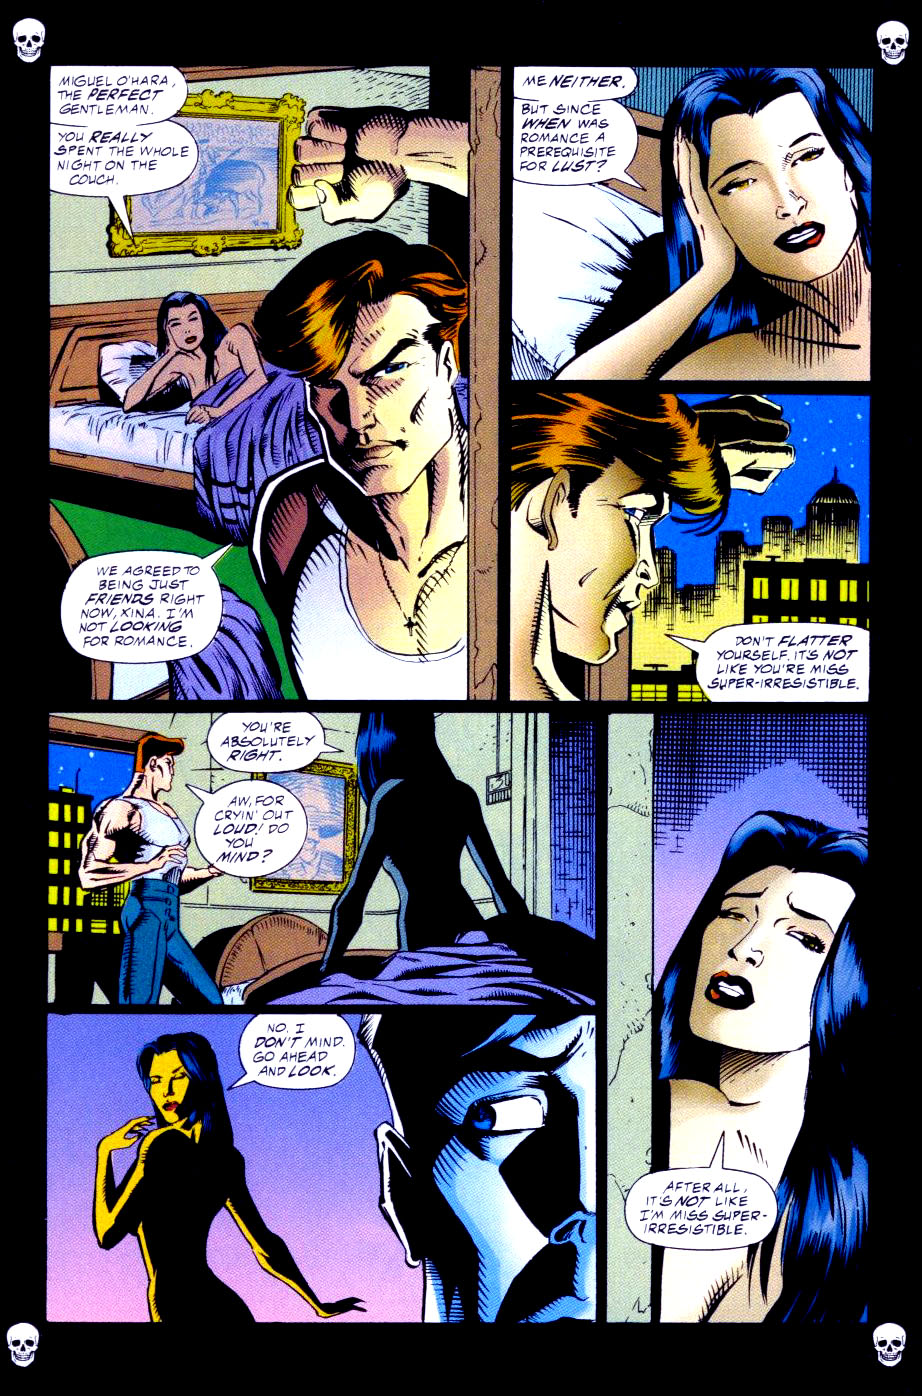 Spider-Man 2099 (1992) issue 32 - Page 5